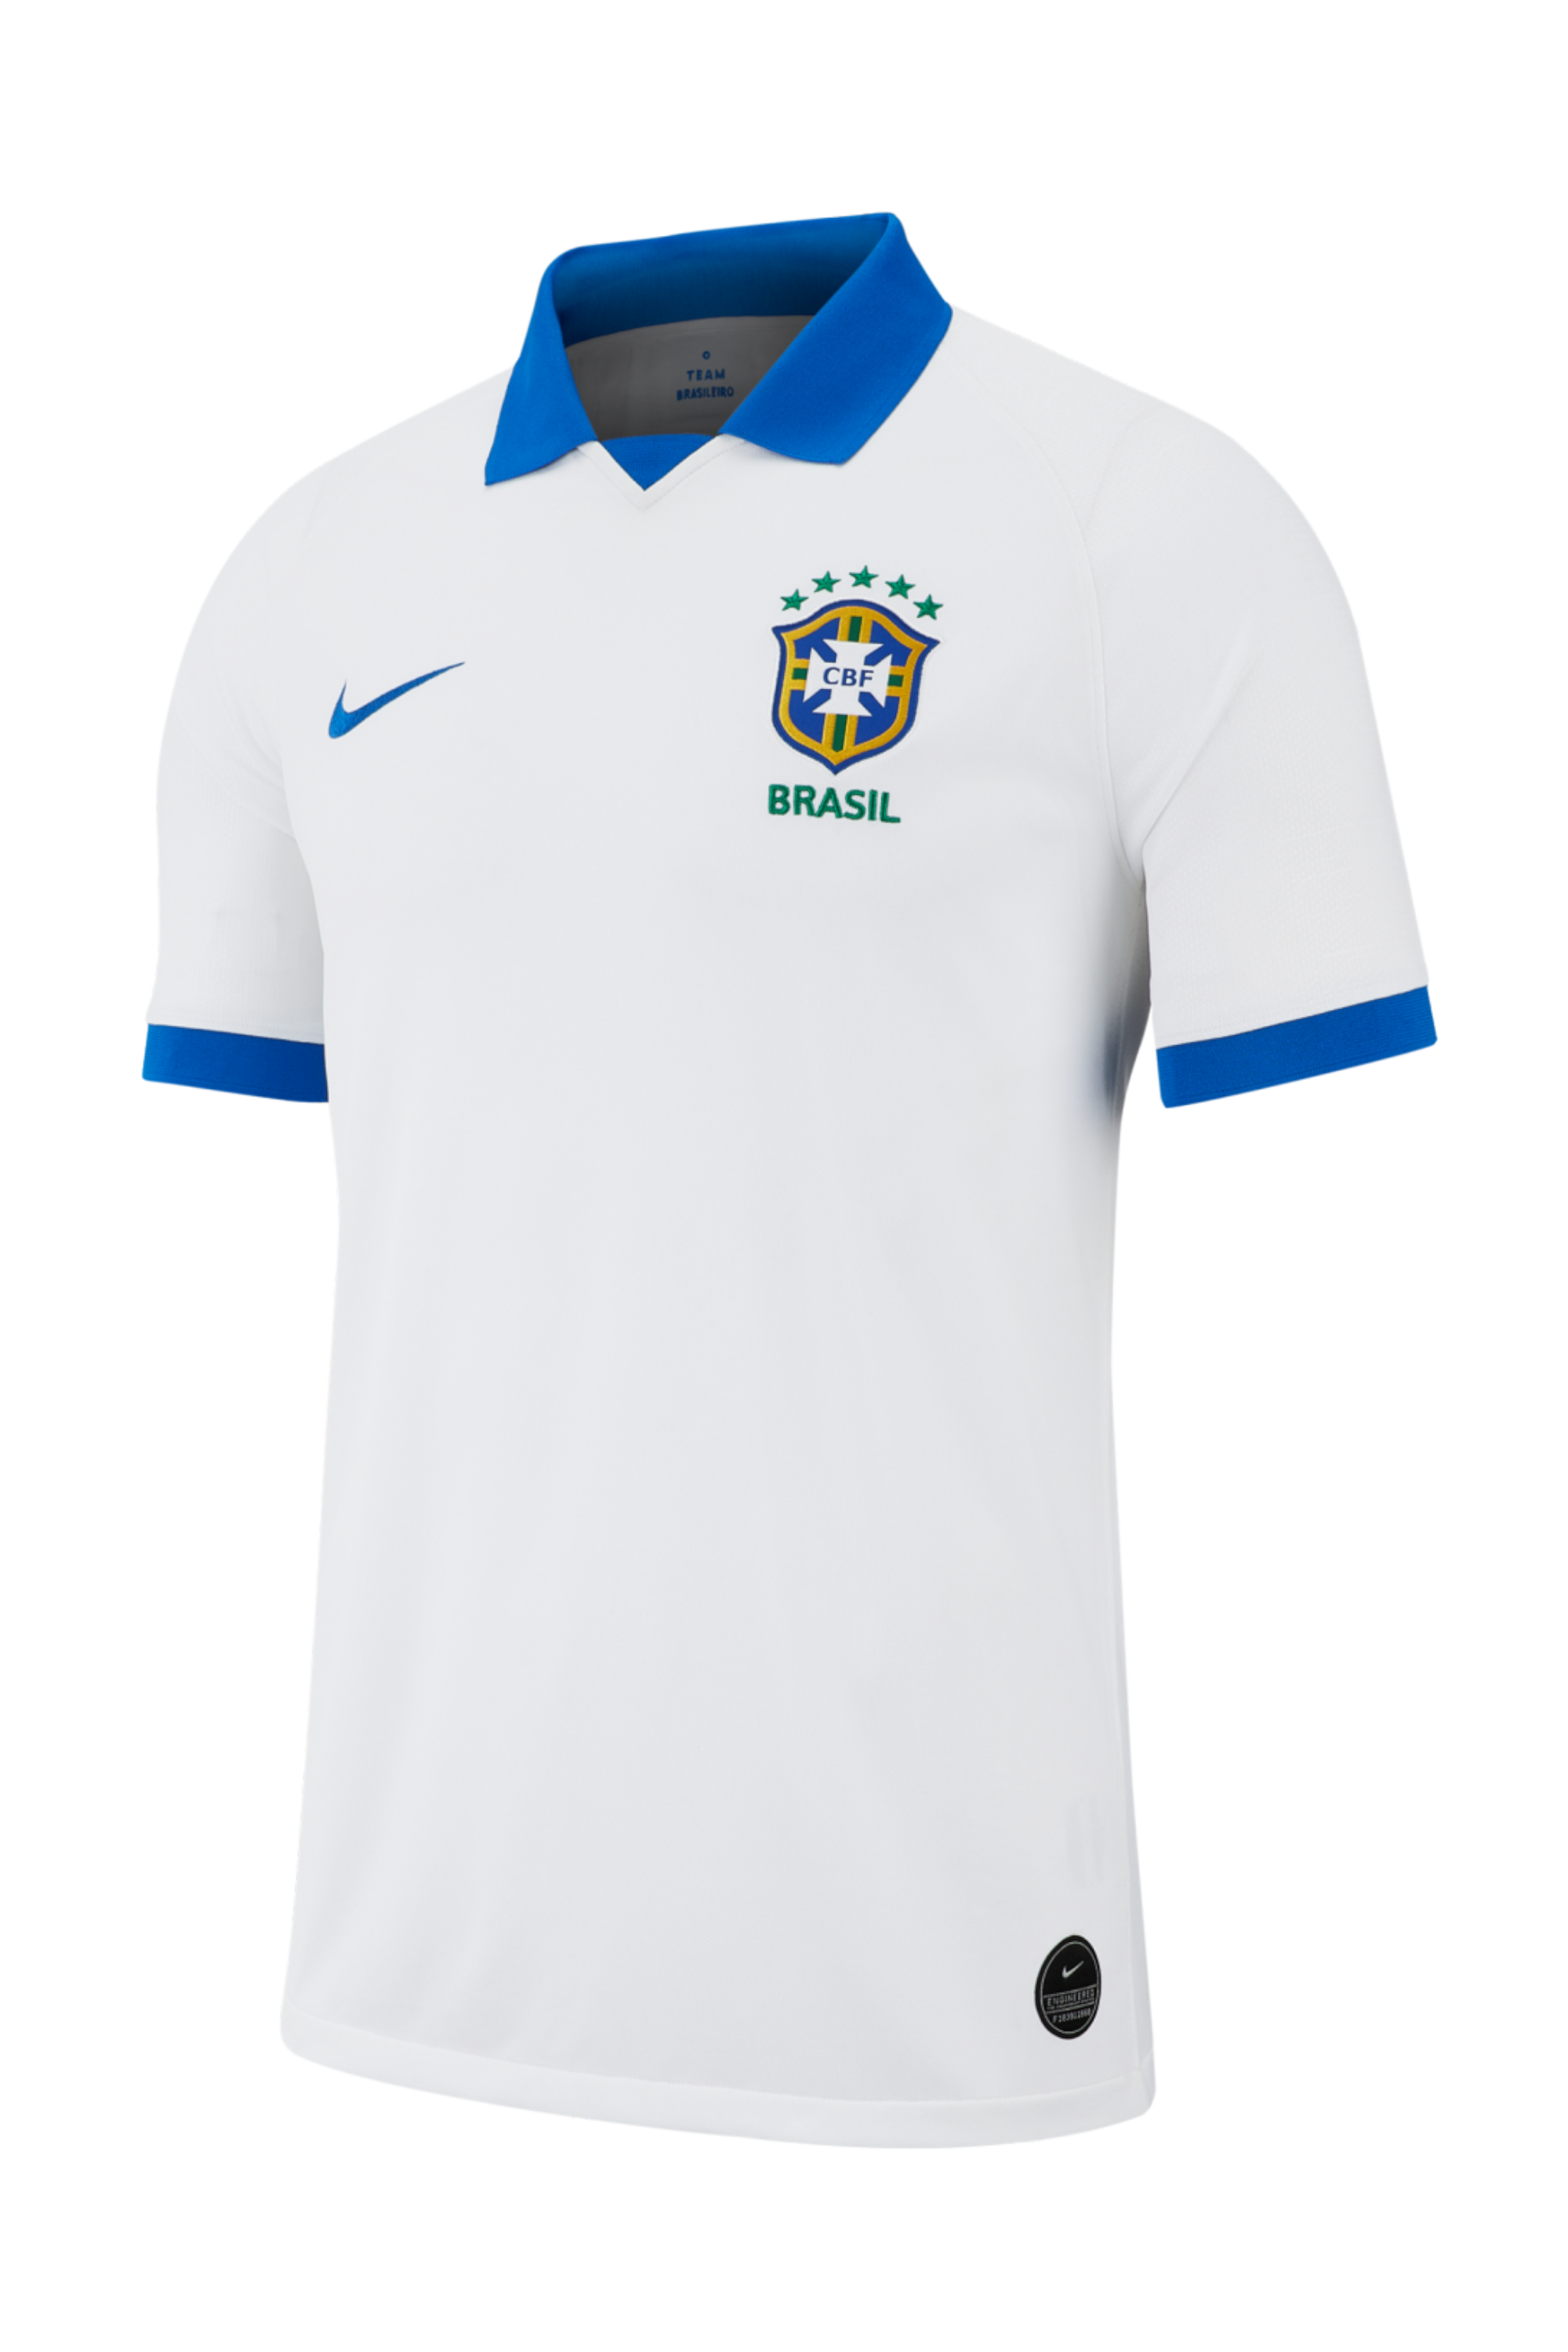 Nike CBF Brazil Soccer Team T-Shirt 2022 World Cup Qatar XL DH7585